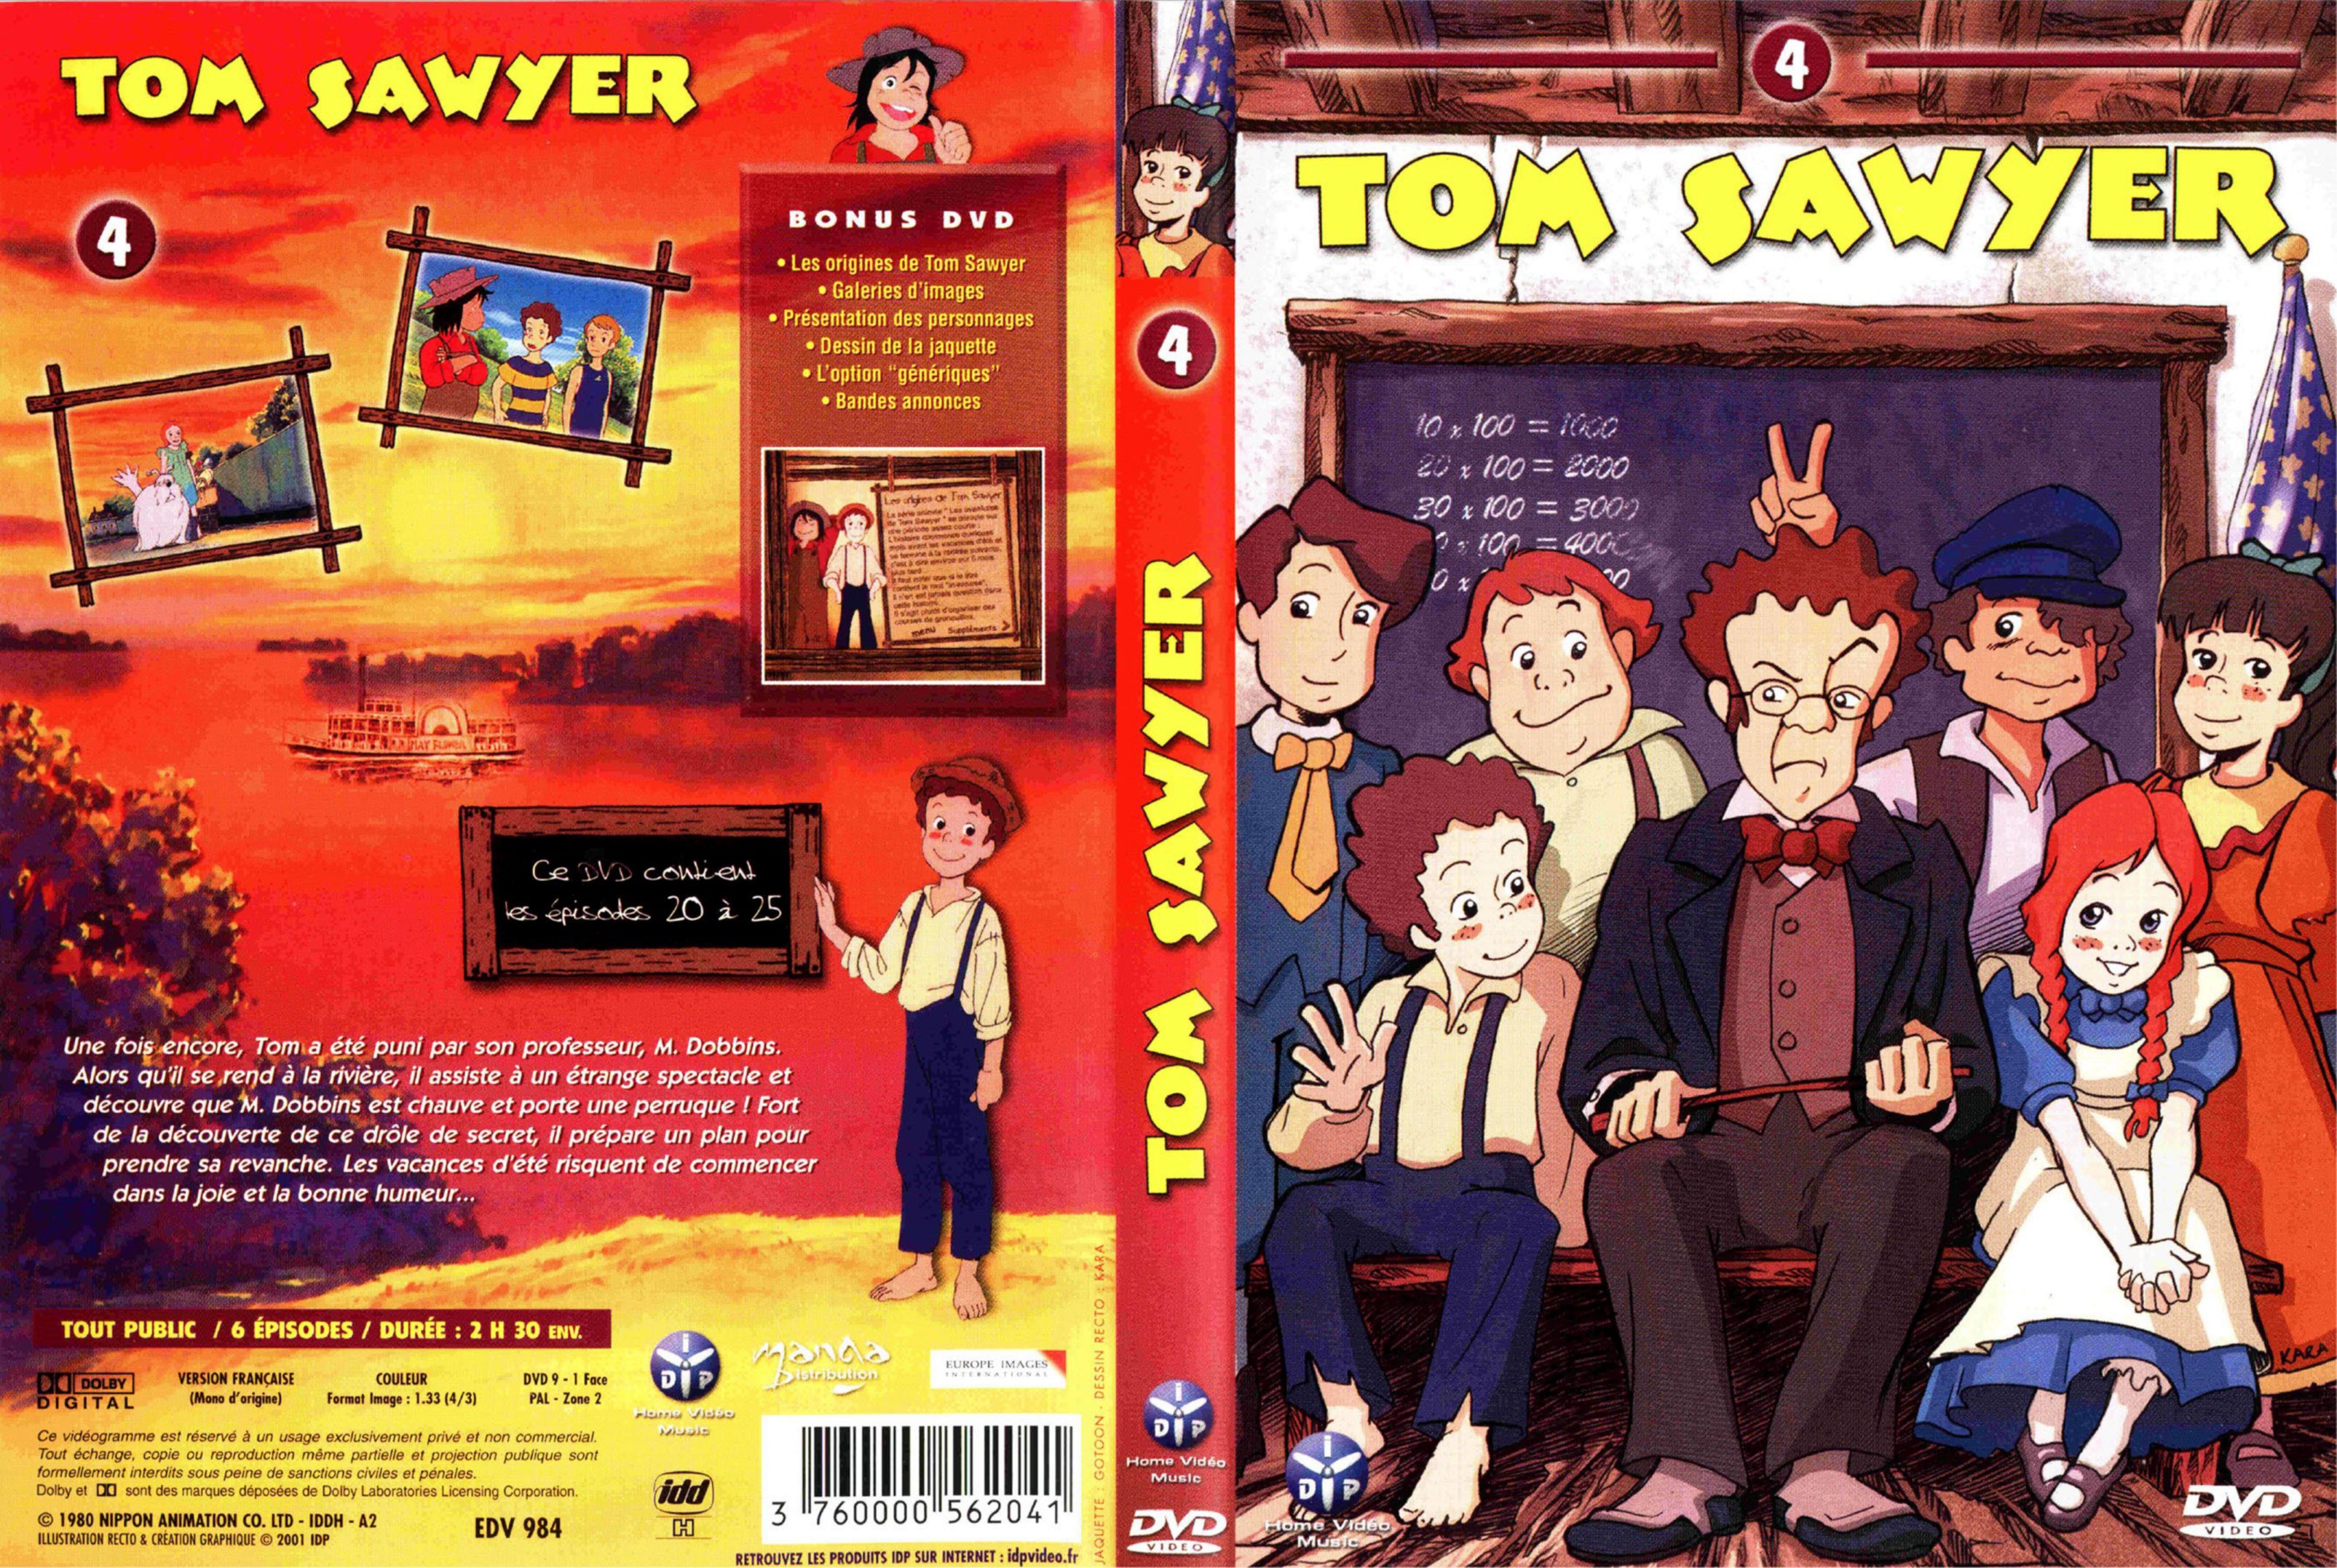 Jaquette DVD Tom Sawyer vol 4